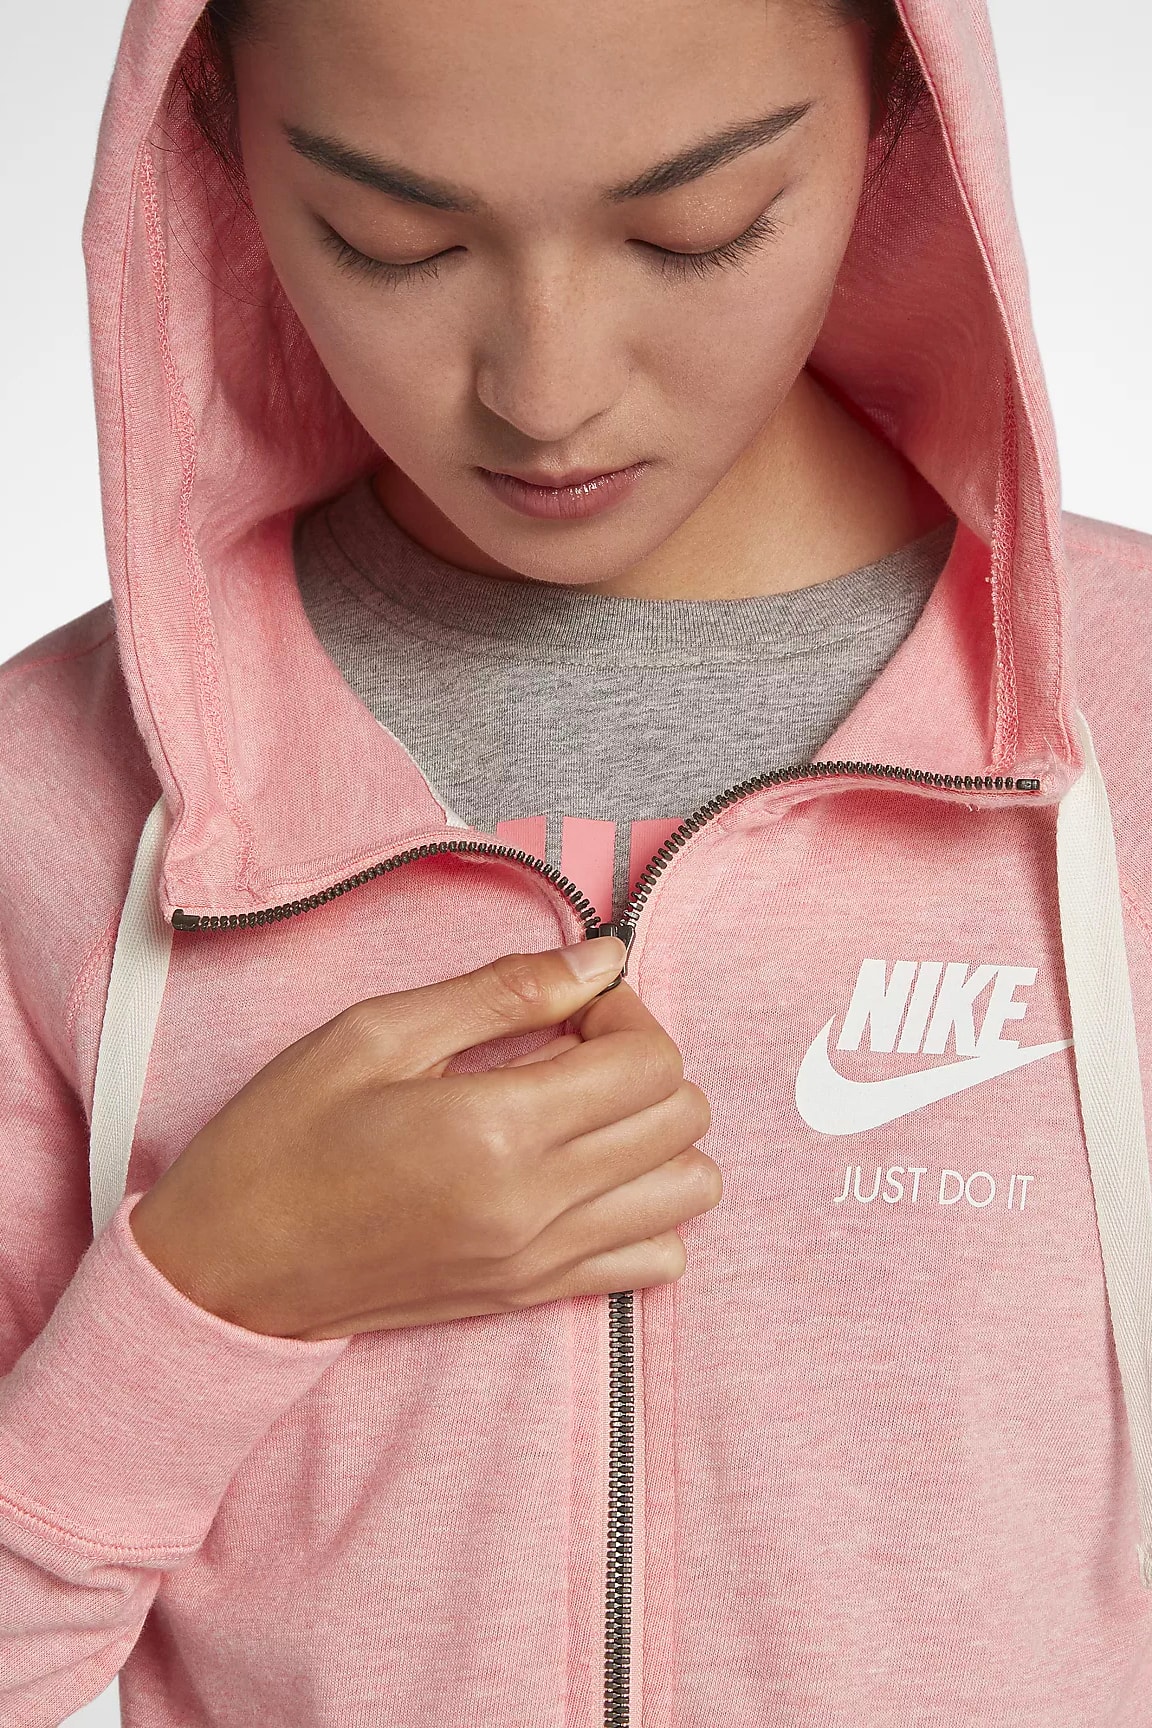 Nike Womens Sweatshirts - Buy Nike Womens Sweatshirts Online at